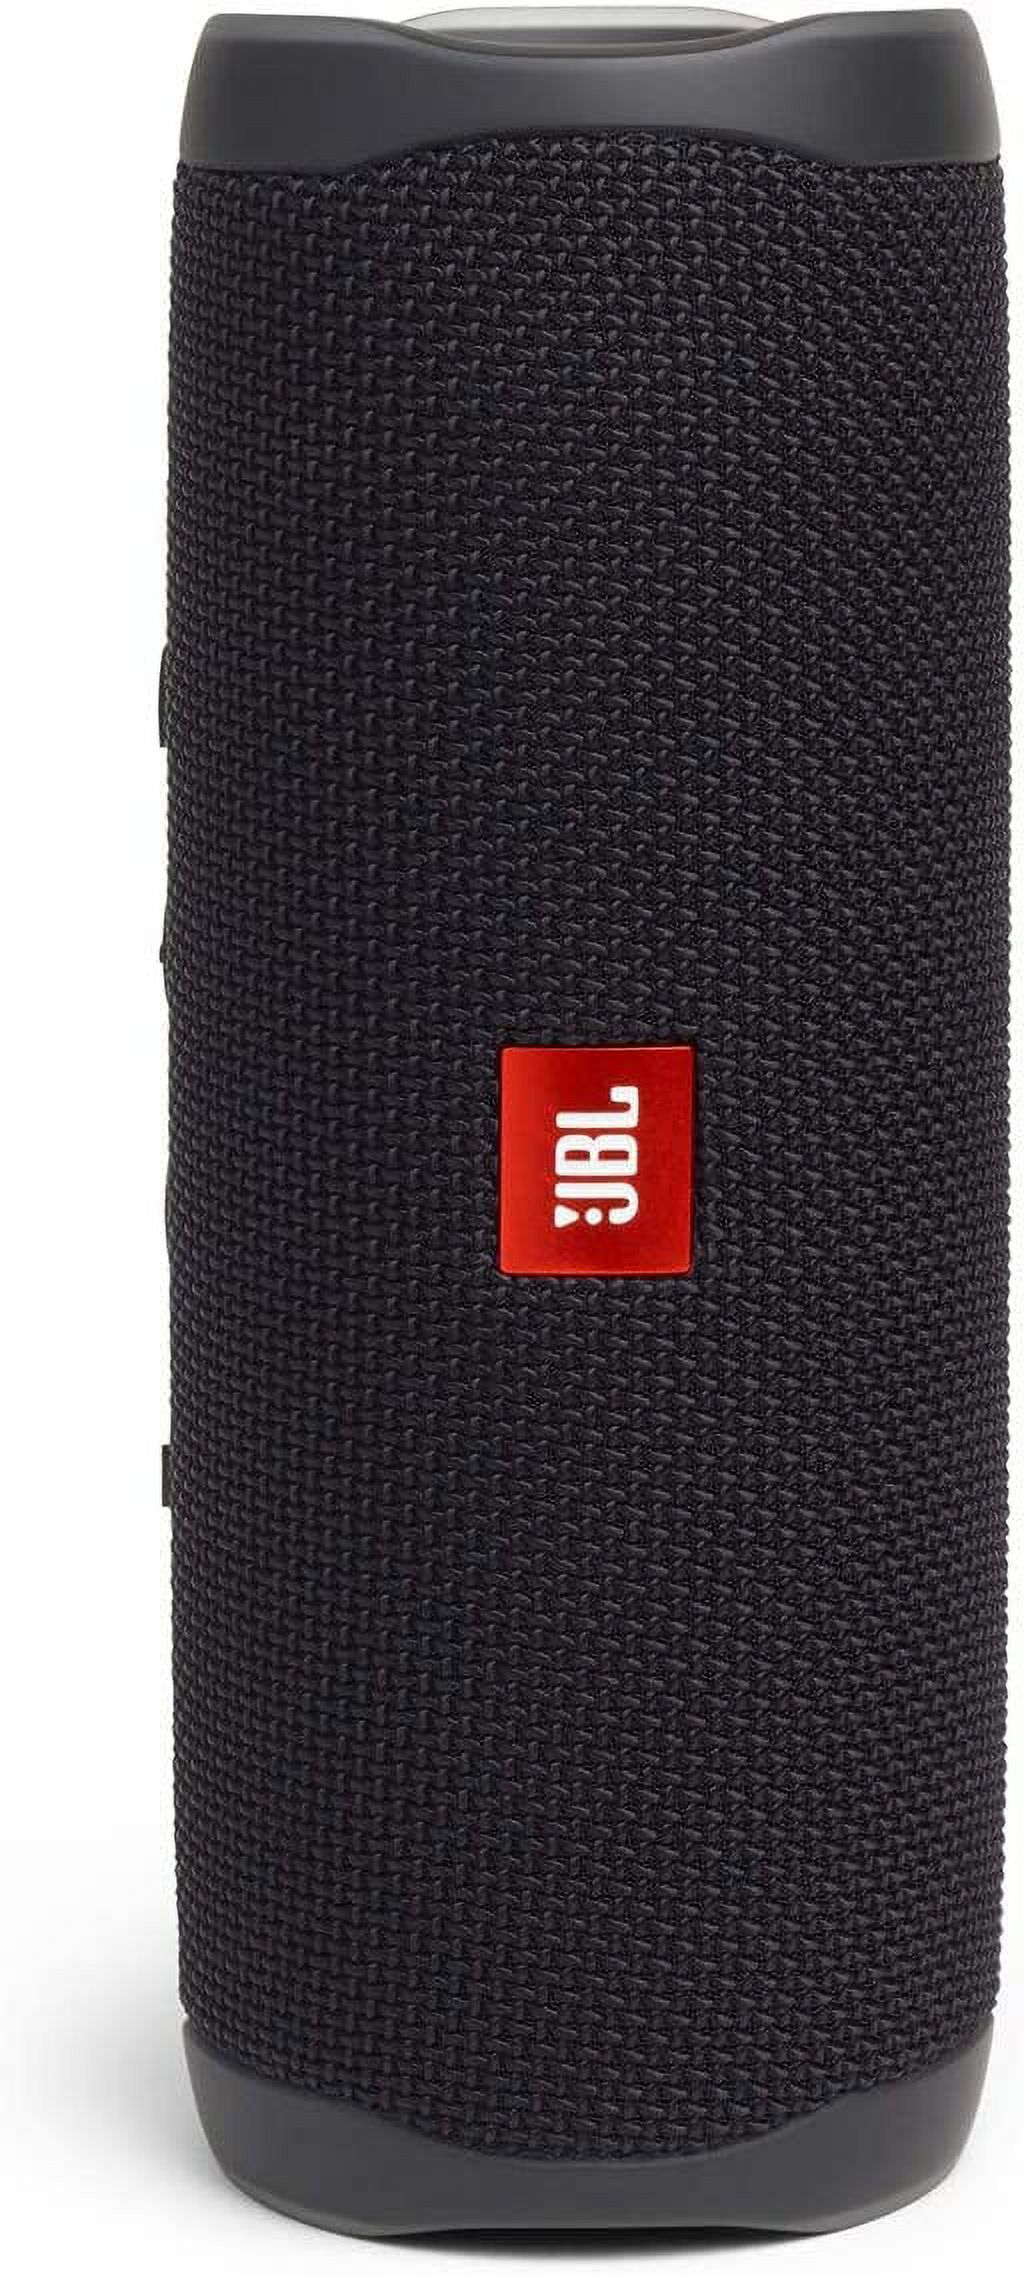 JBL Flip 5 Portable Waterproof Wireless Bluetooth Speaker - Black - image 1 of 4